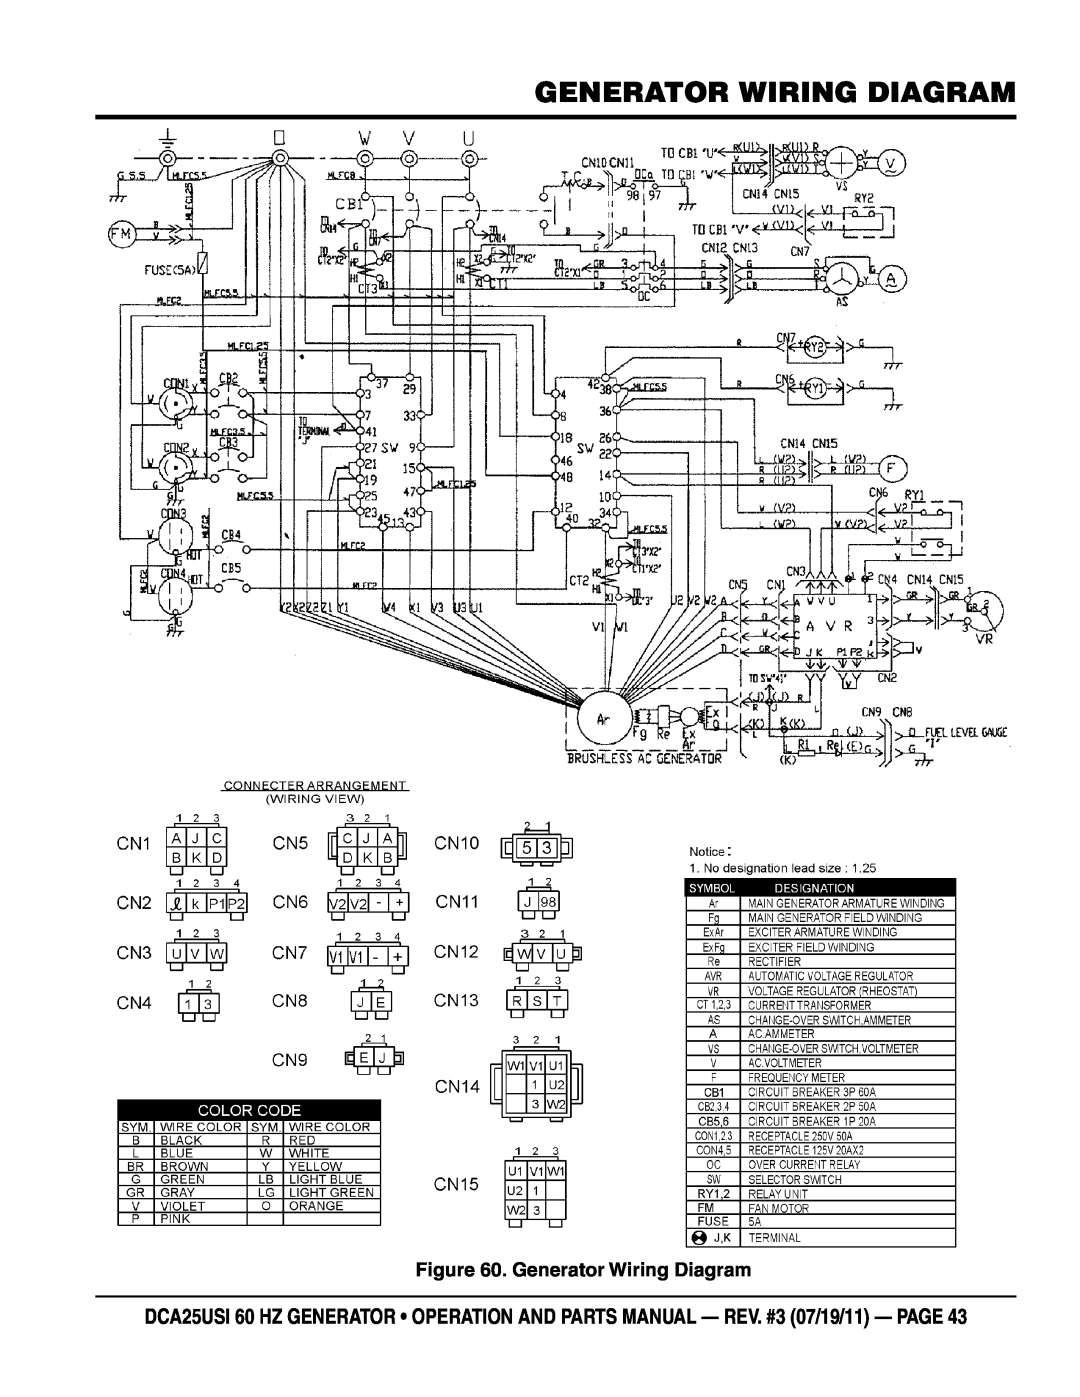 Multiquip DCA25USI manual Generator Wiring Diagram 